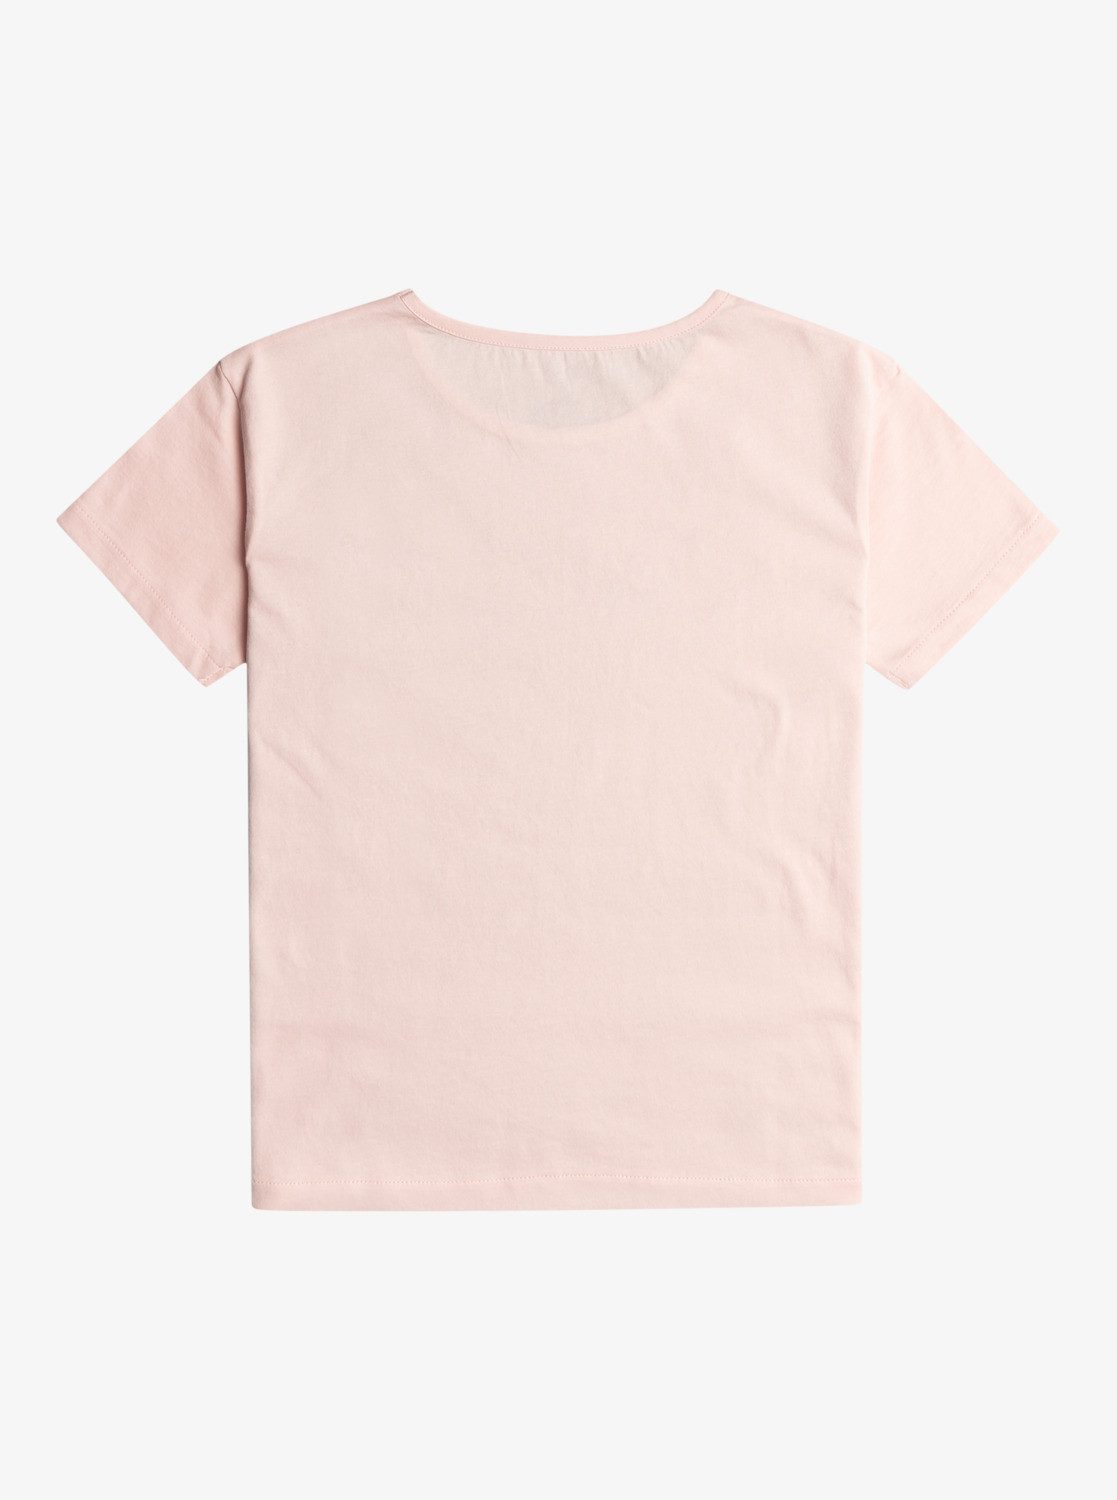 A And Night Day Roxy English Rose T-Shirt